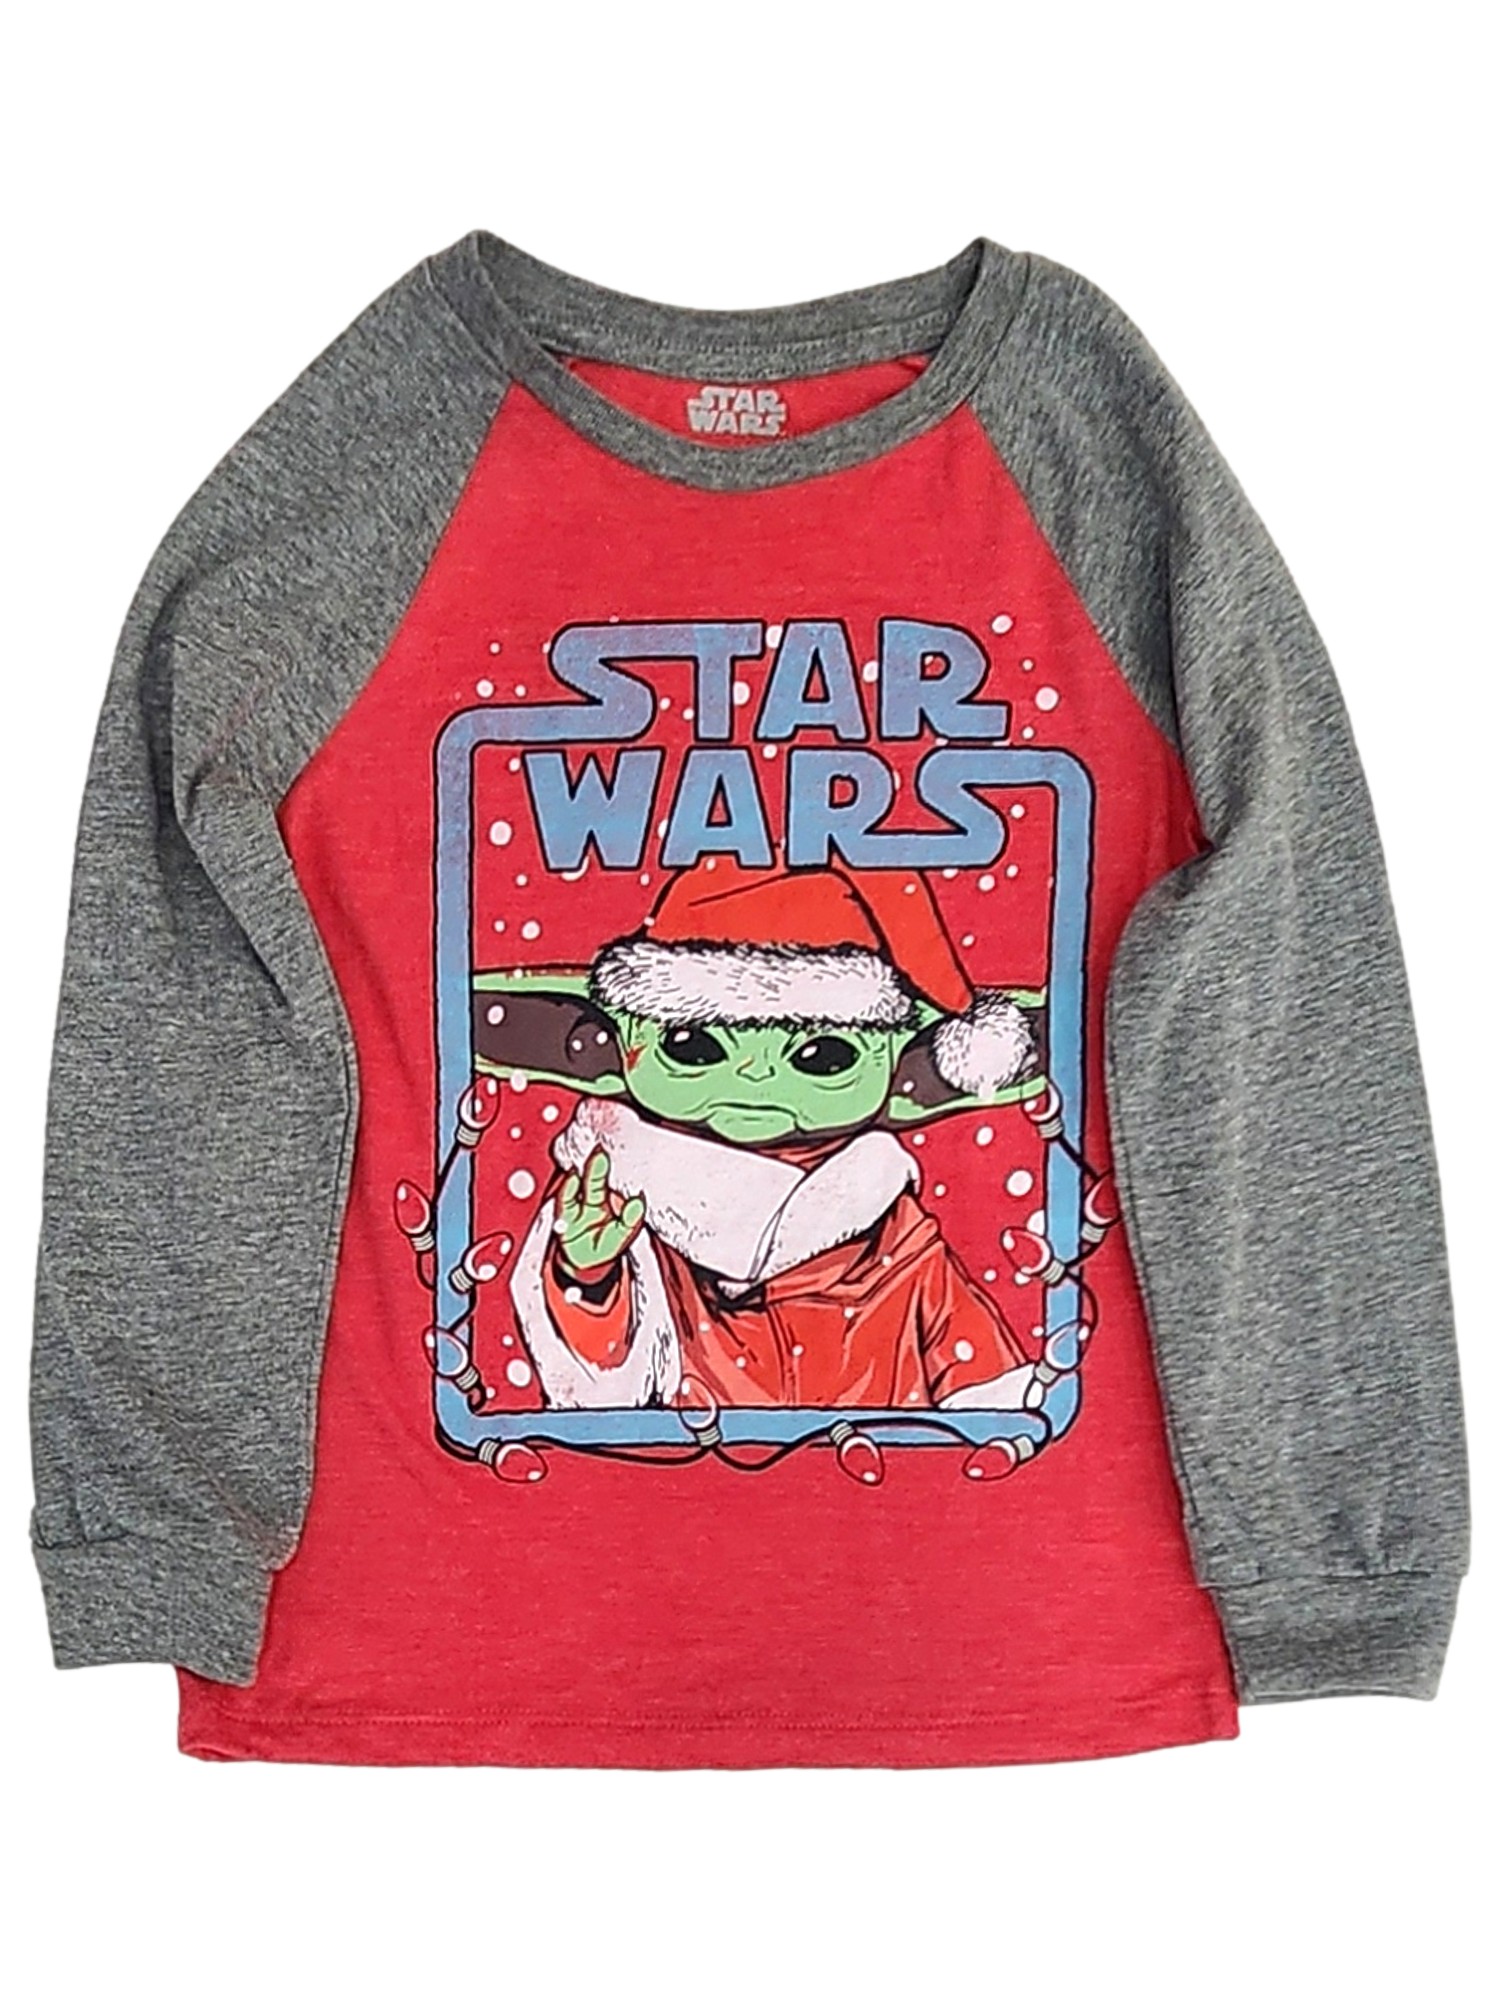 Star Wars Boys Gray & Red Long Sleeved Christmas Yoda T-Shirt Tee Shirt XS 4-5